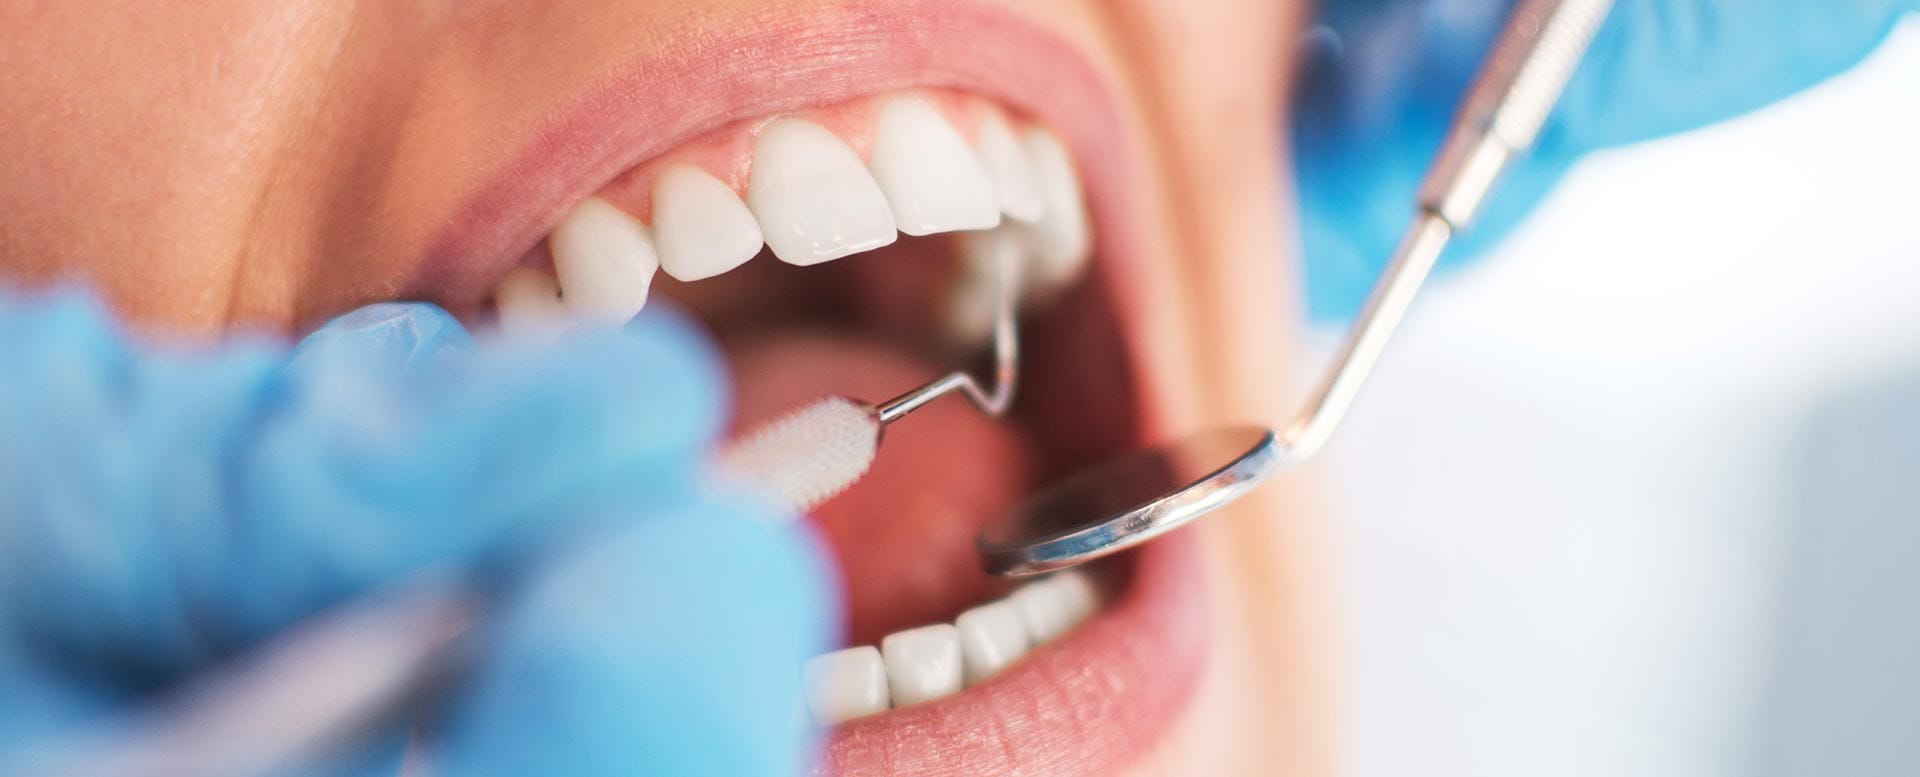 Zahn abgebrochen - Behandlung